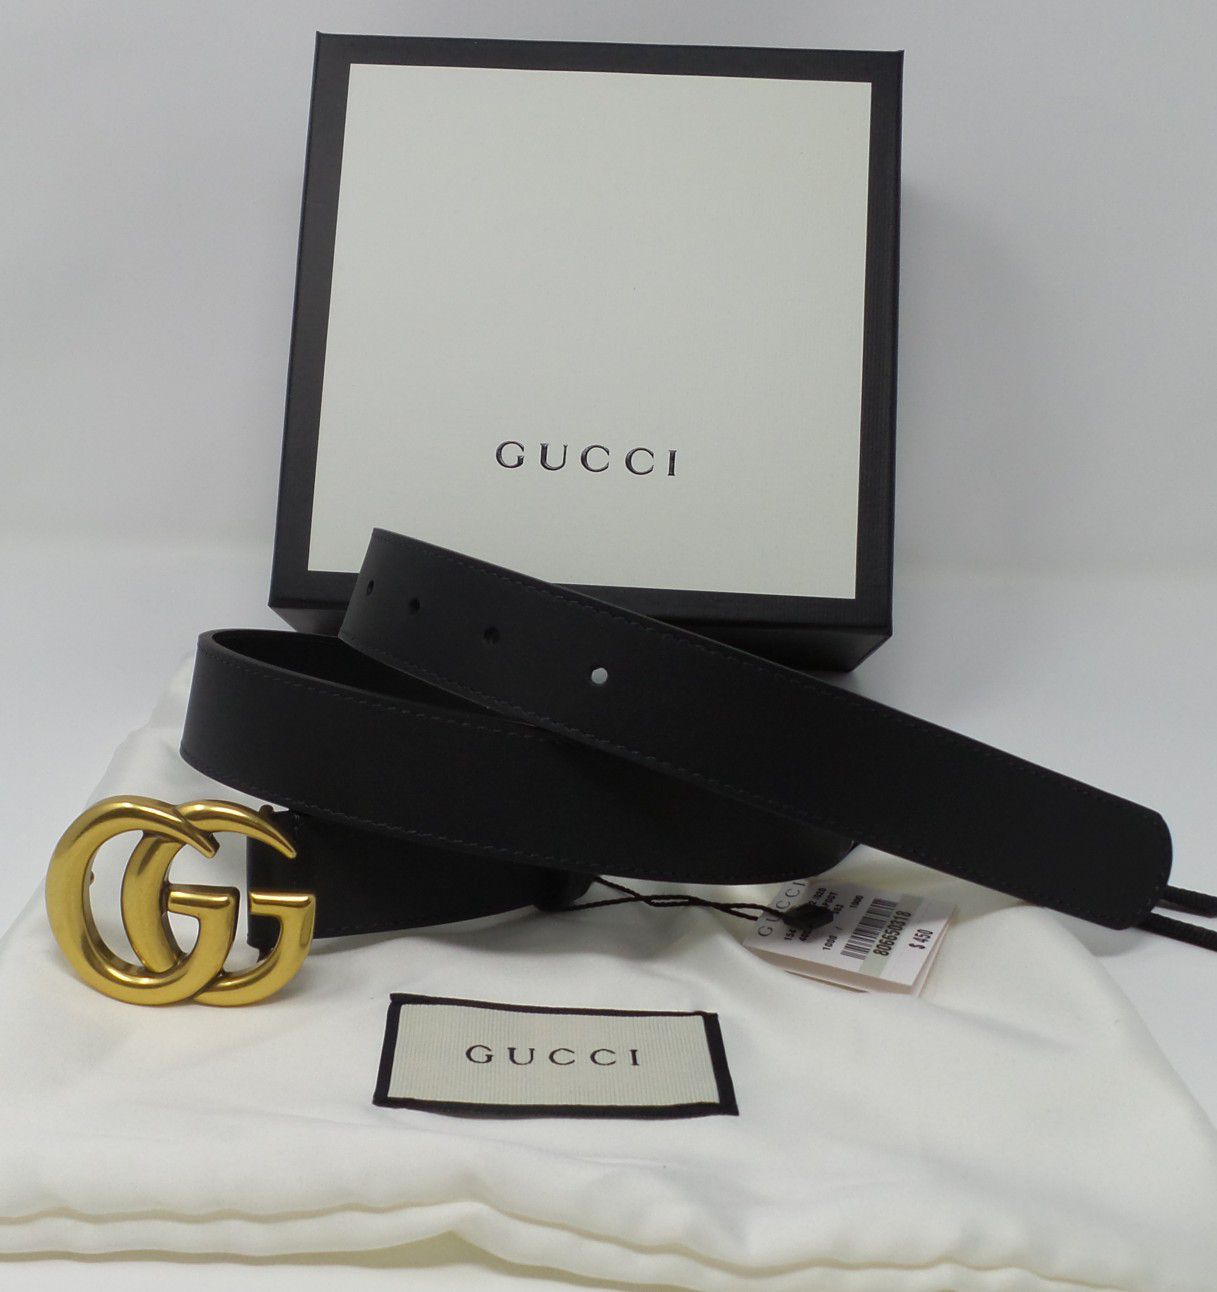 New Gucci Marmont Belt Thinner 1" Strap Ferragamo LV Versace Fendi Wallet Bag